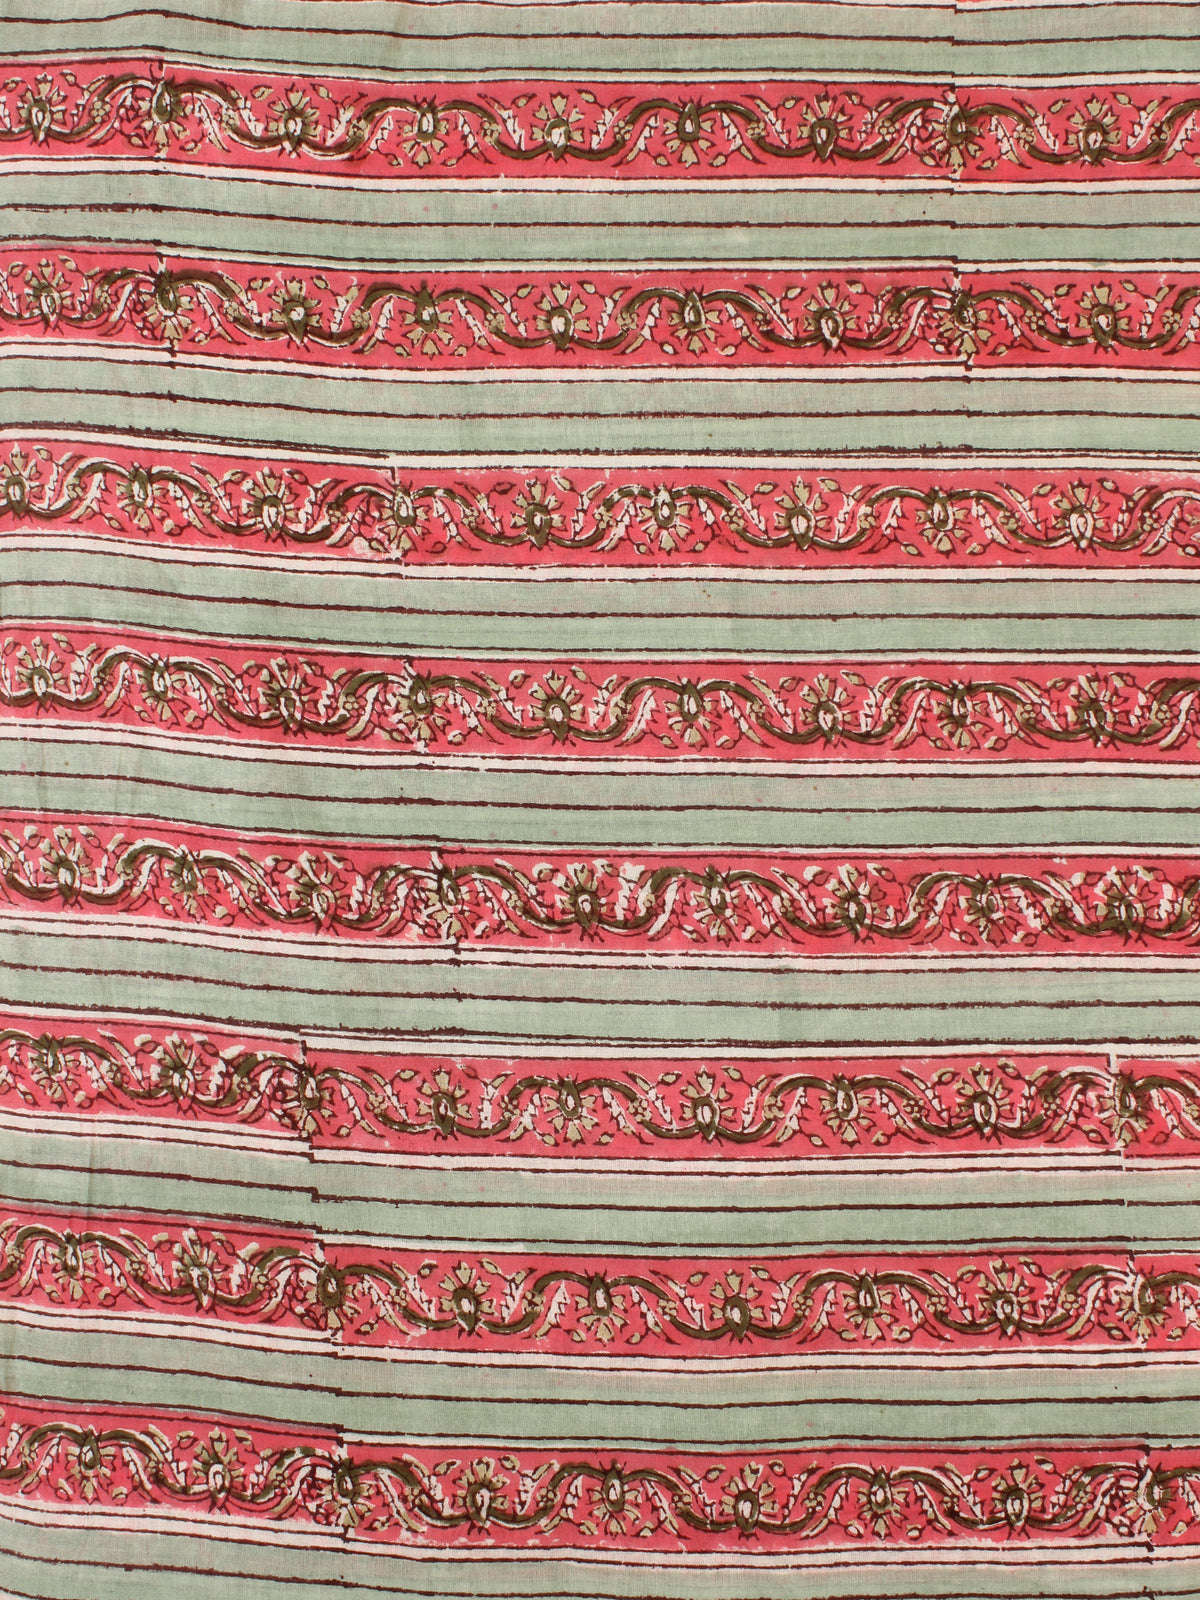 Green Pink Hand Block Printed Cotton Fabric Per Meter - F001F2198